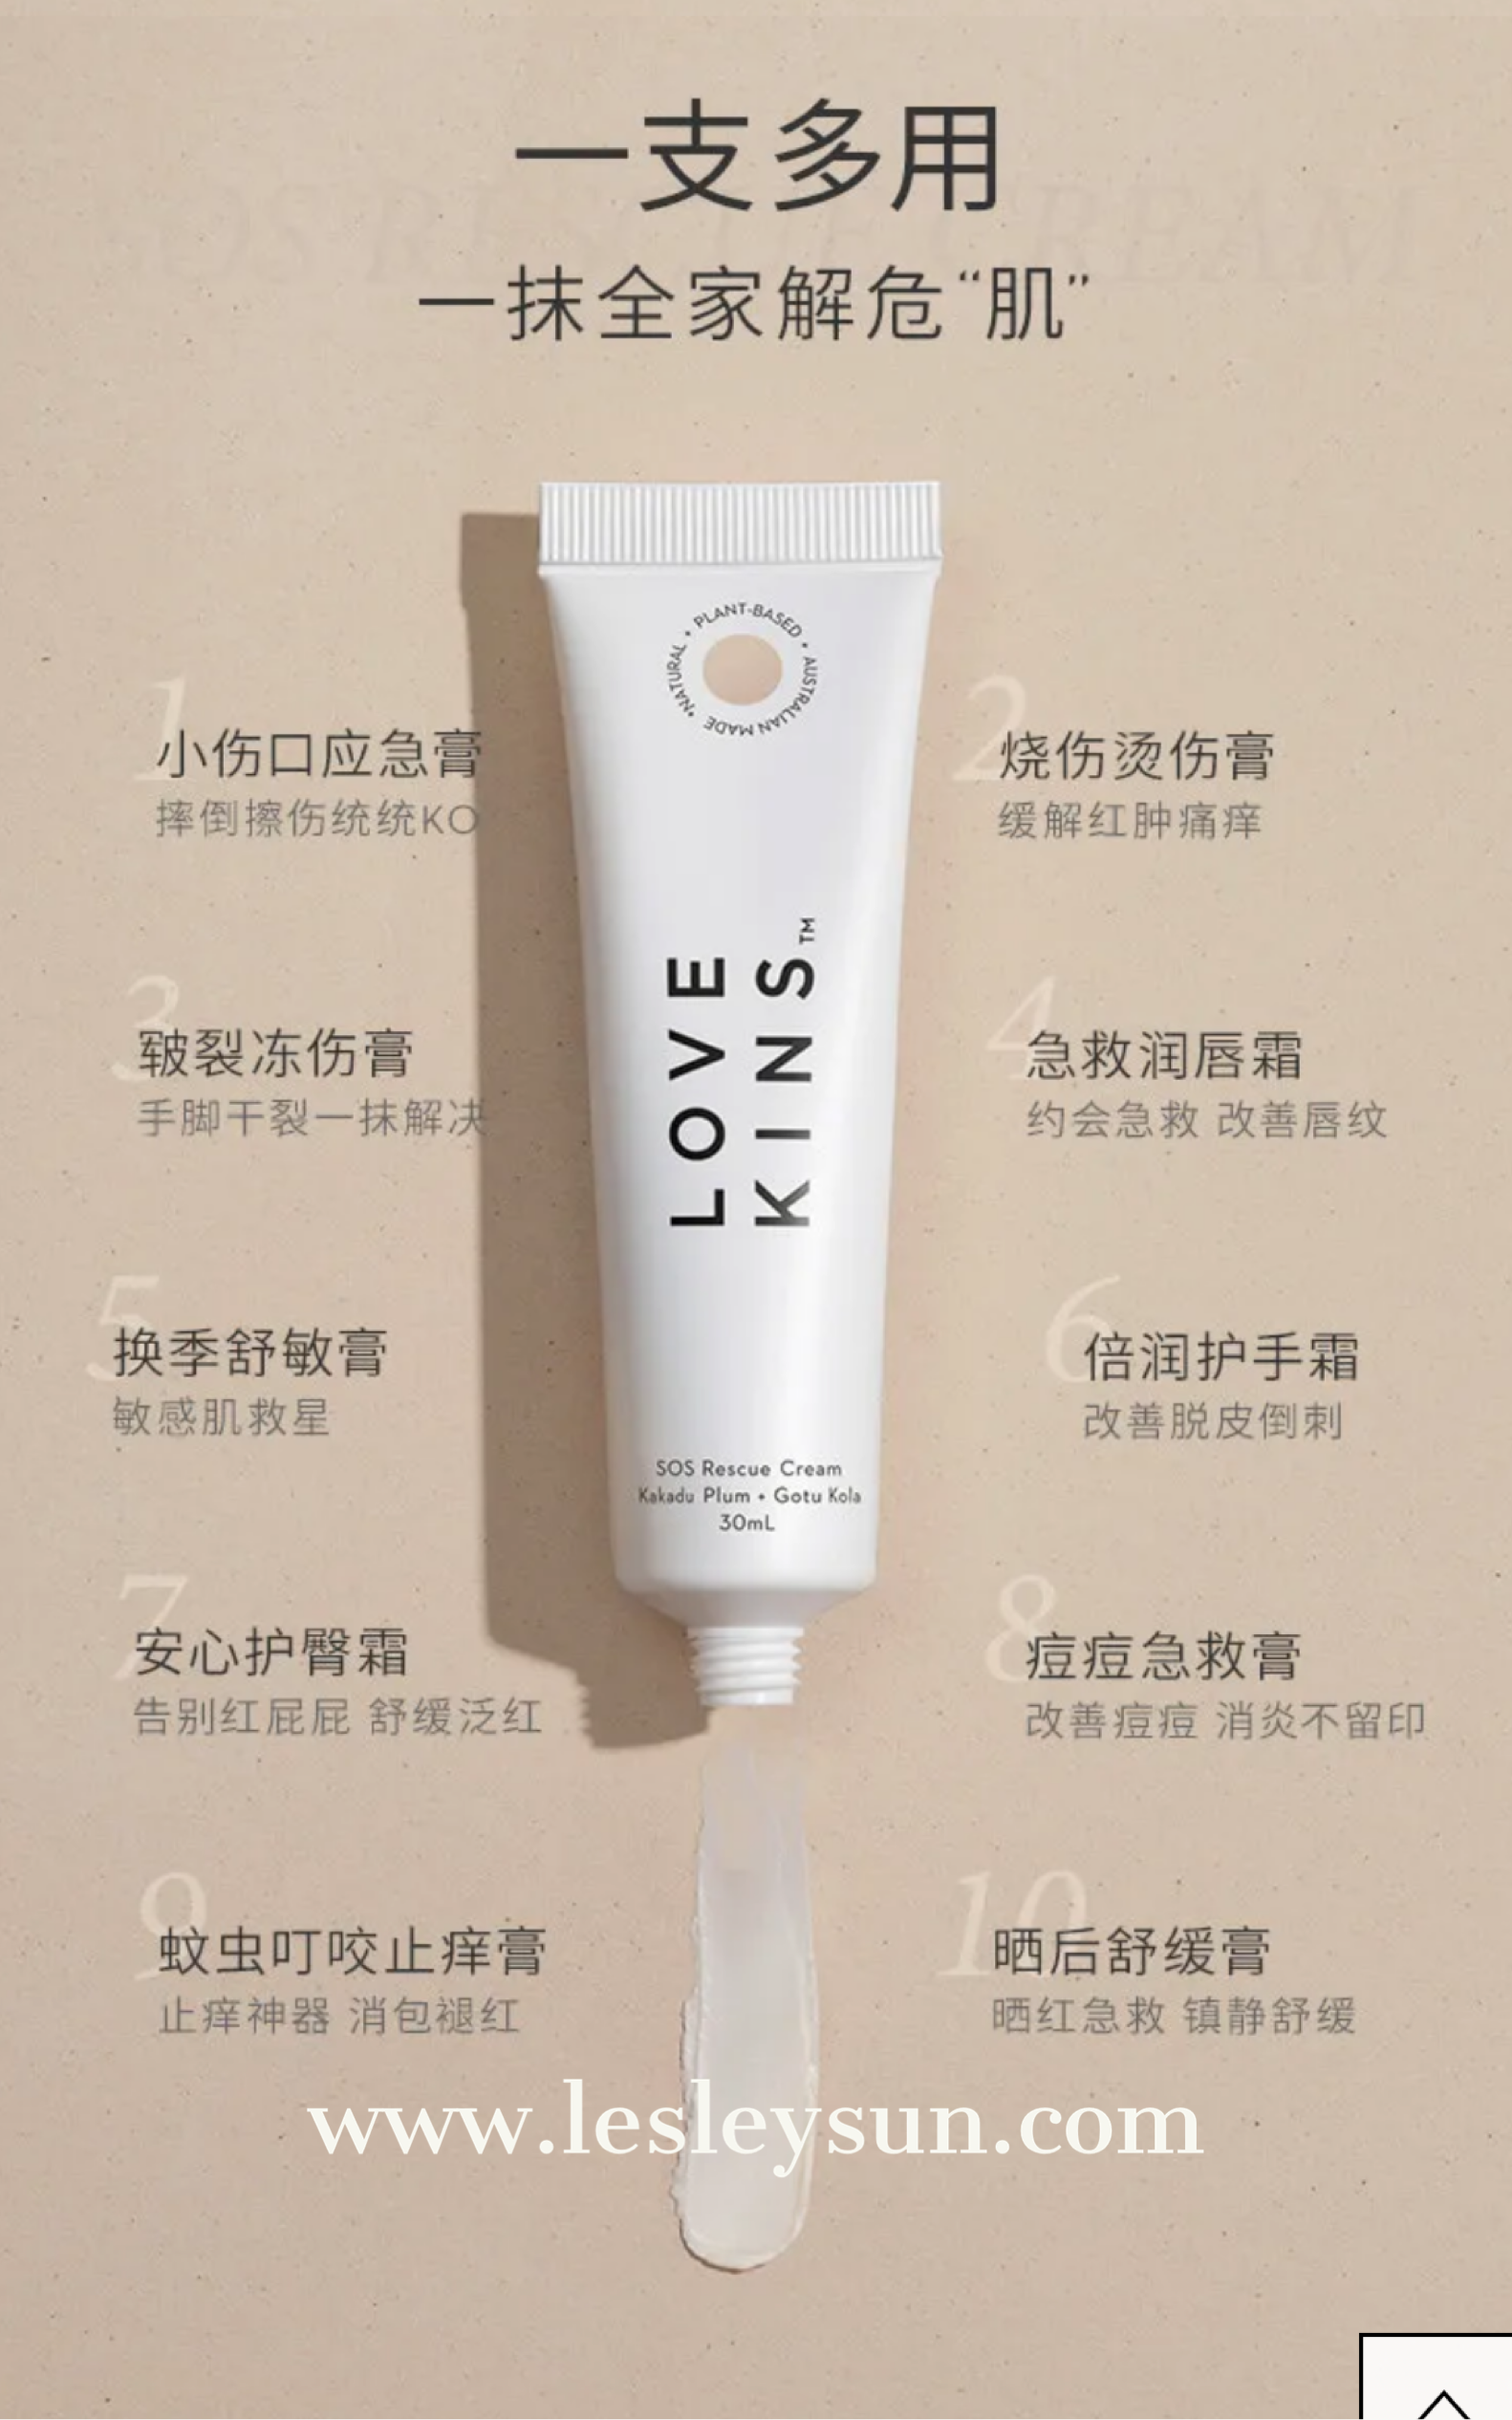 Lovekins SOS Rescue Cream 万用膏 30ml (Ready Stocks)